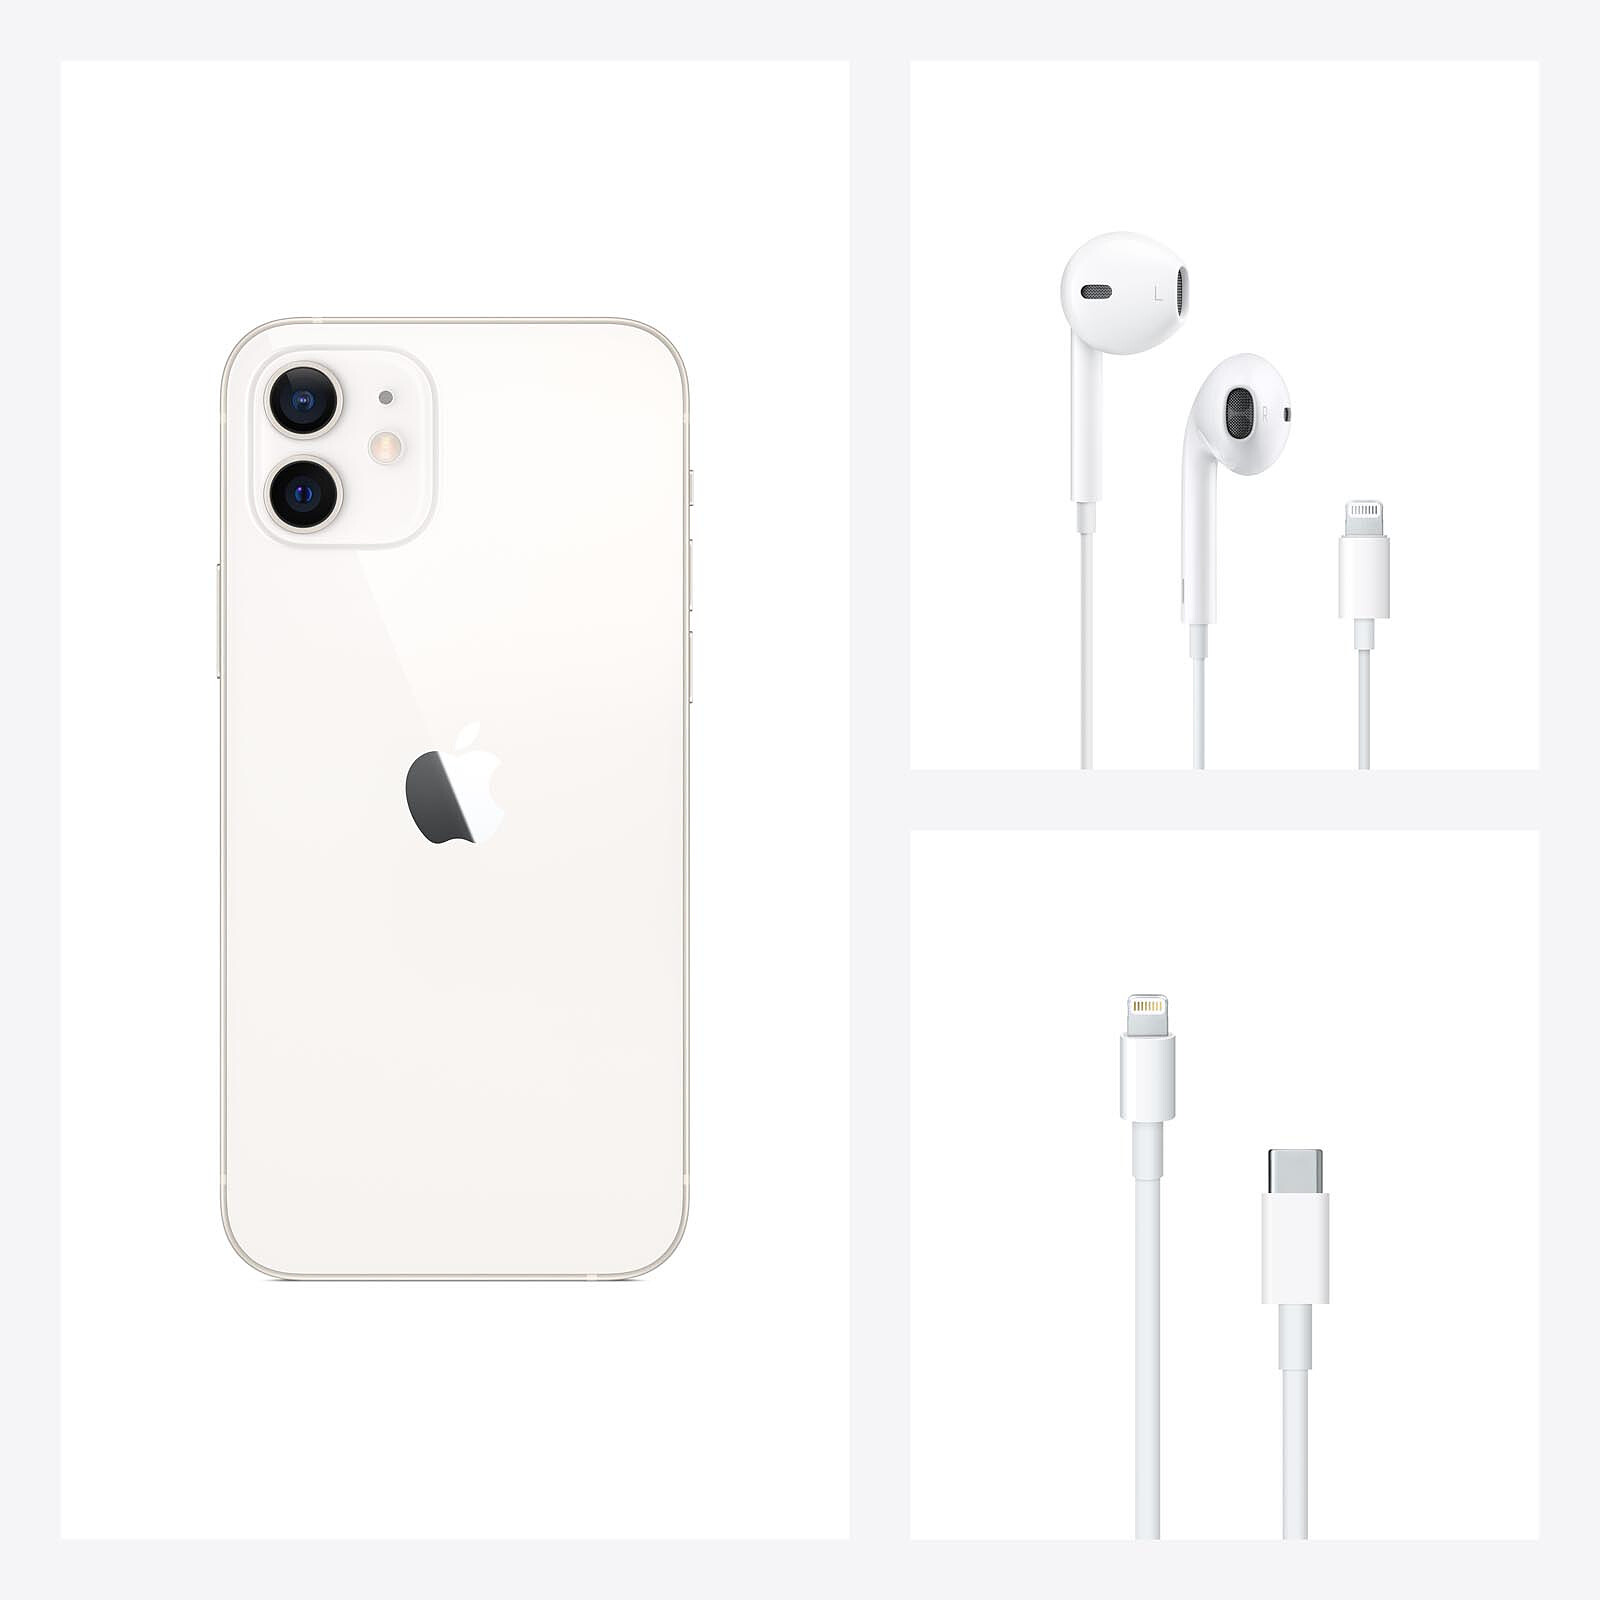 Apple iPhone 12 mini 64 GB White - Mobile phone & smartphone